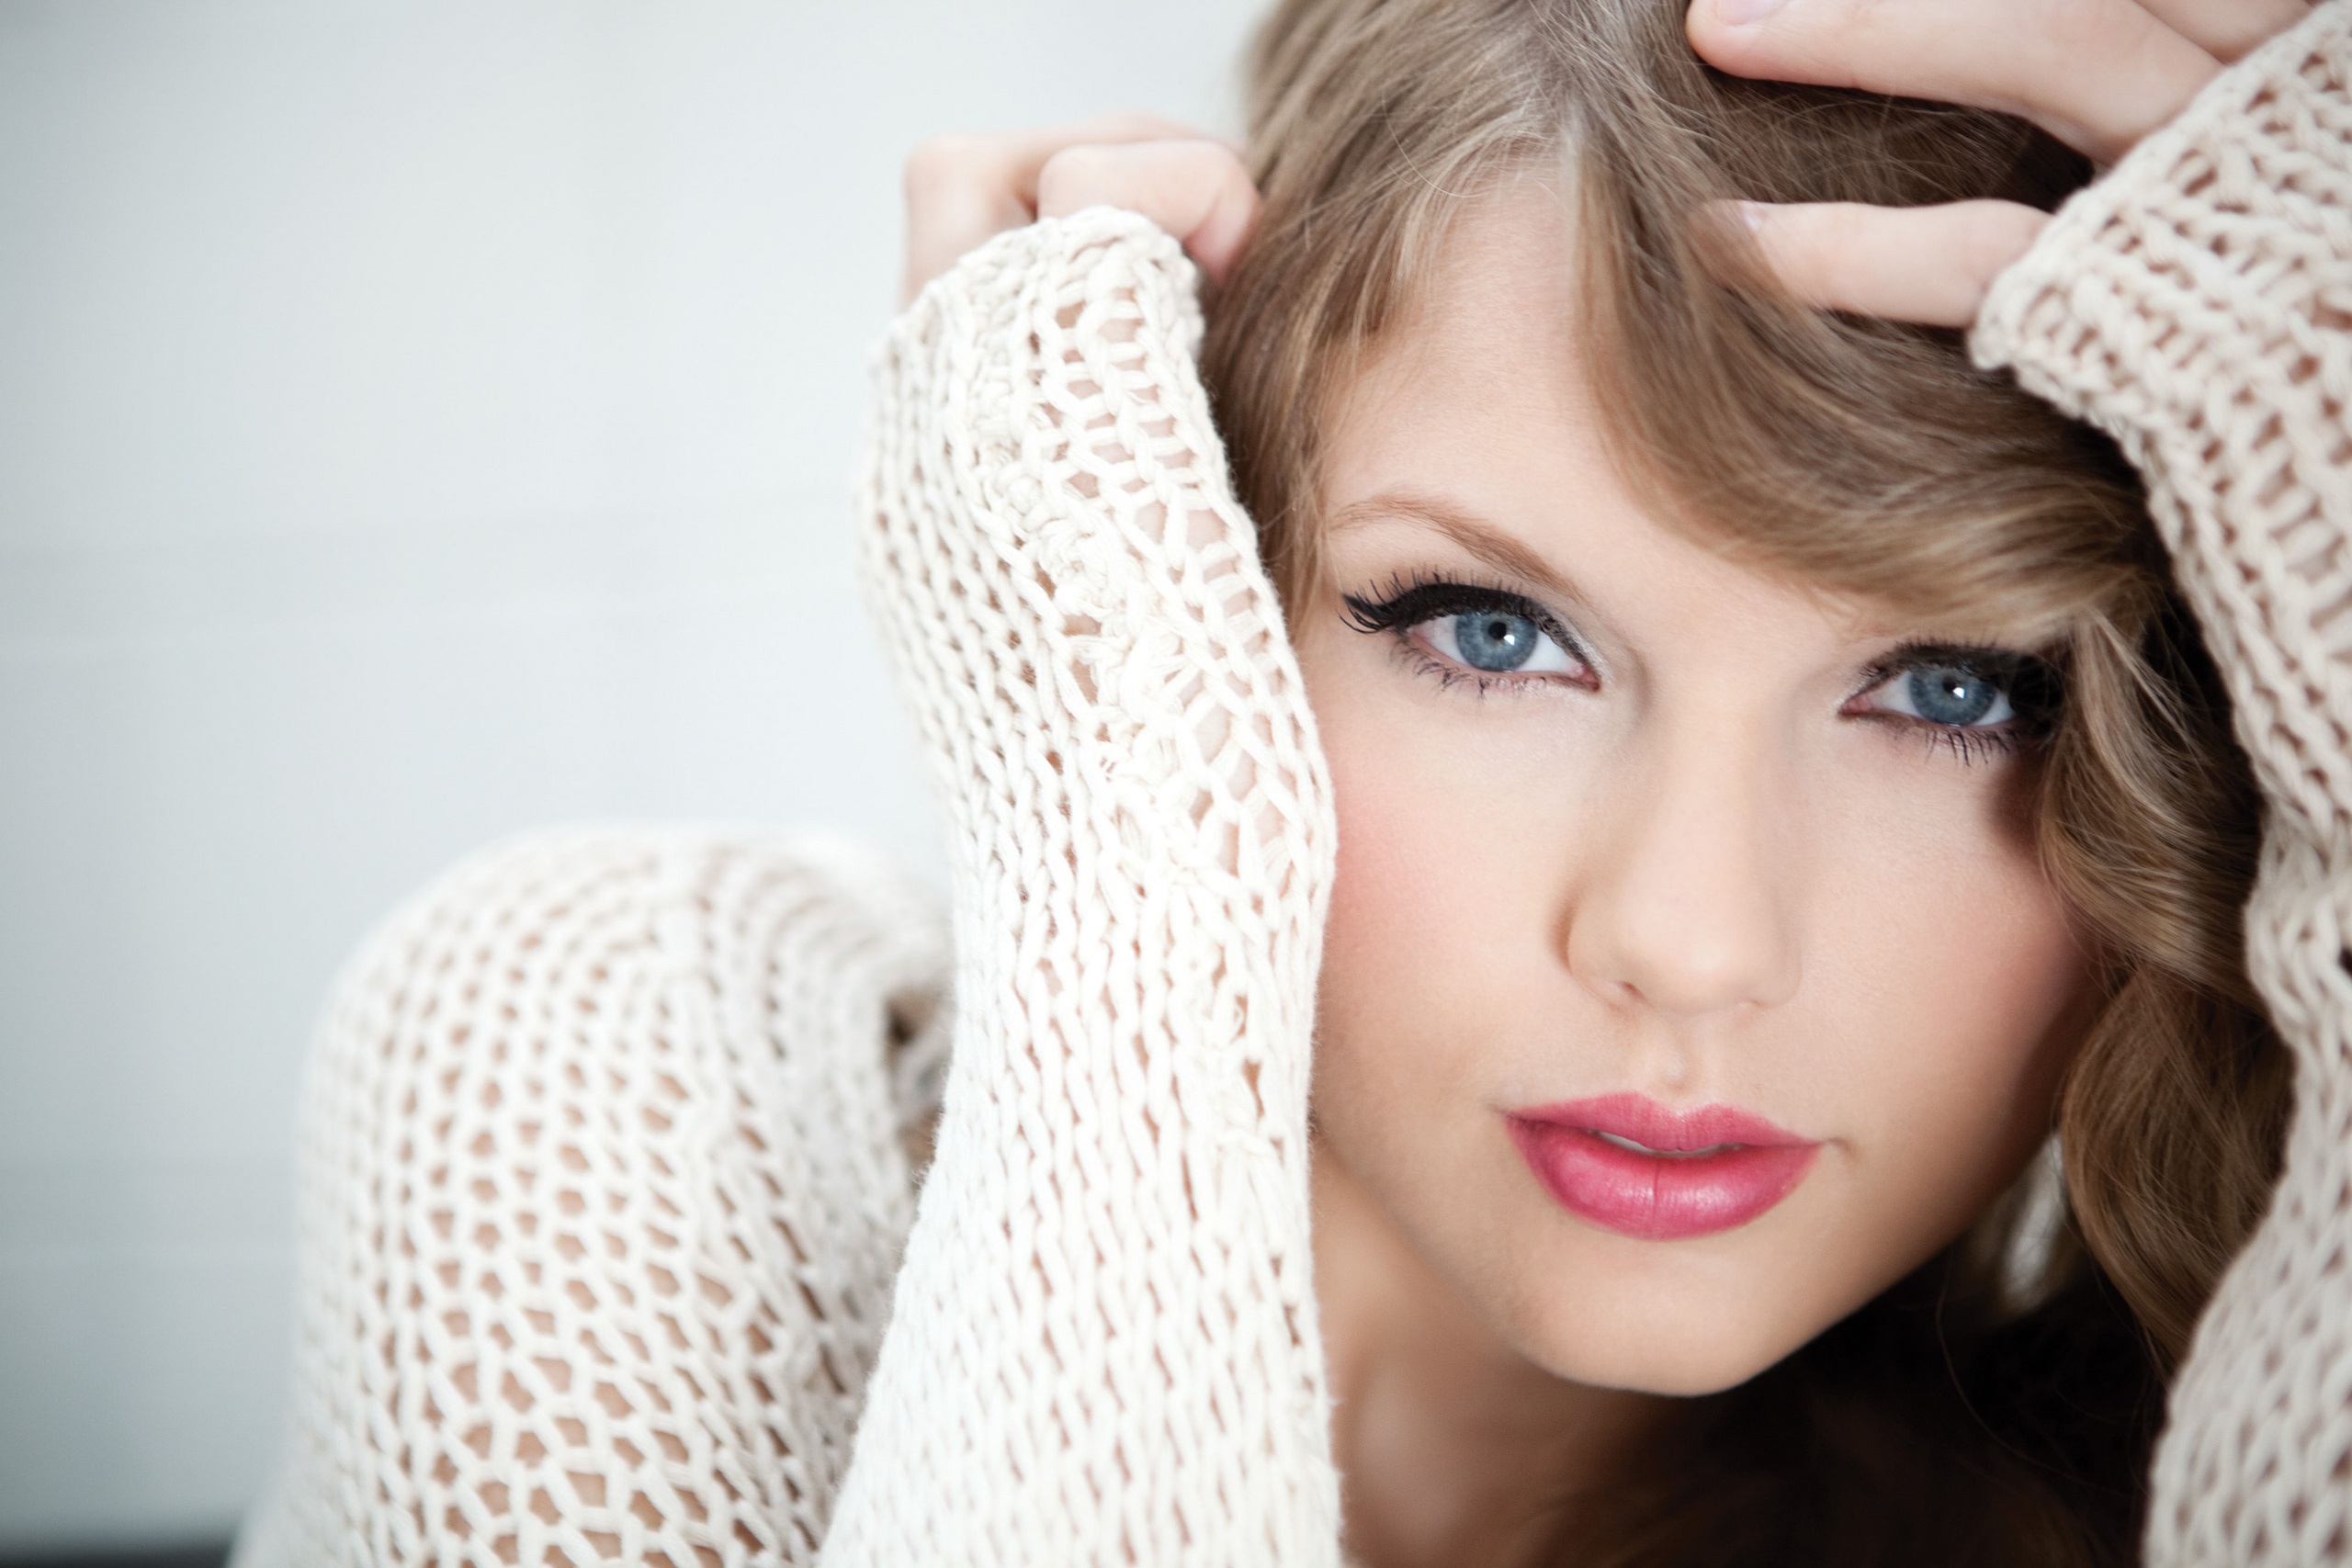 tayLor - Taylor Swift Photo (15672654) - Fanpop